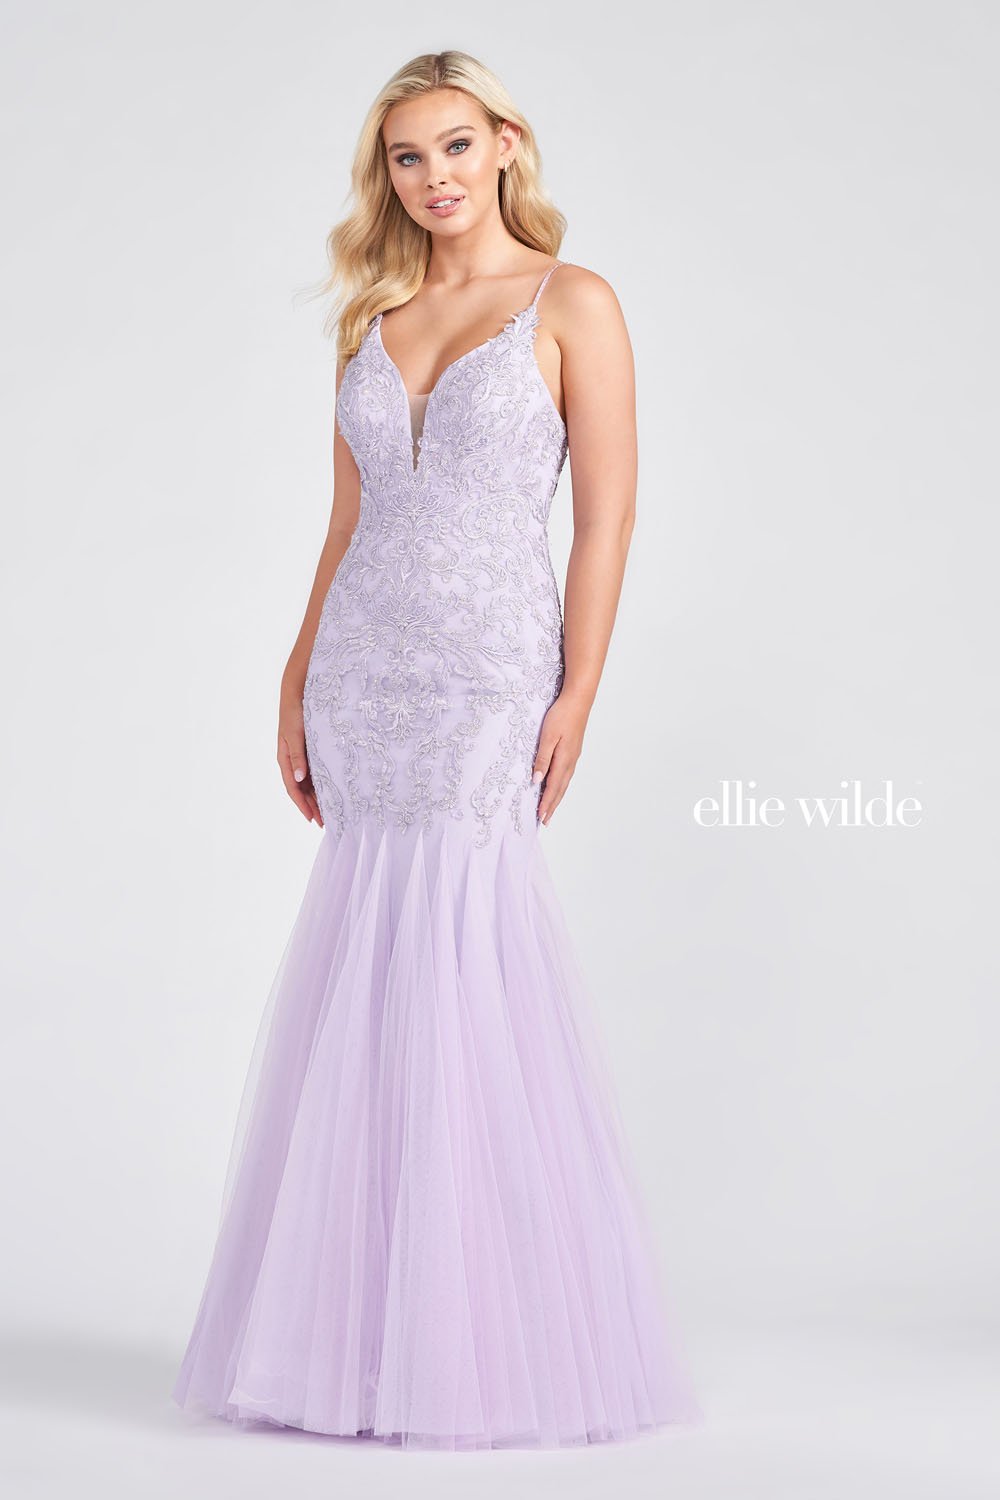 Ellie Wilde Lilac EW122042 Prom Dress Image.  Lilac formal dress.